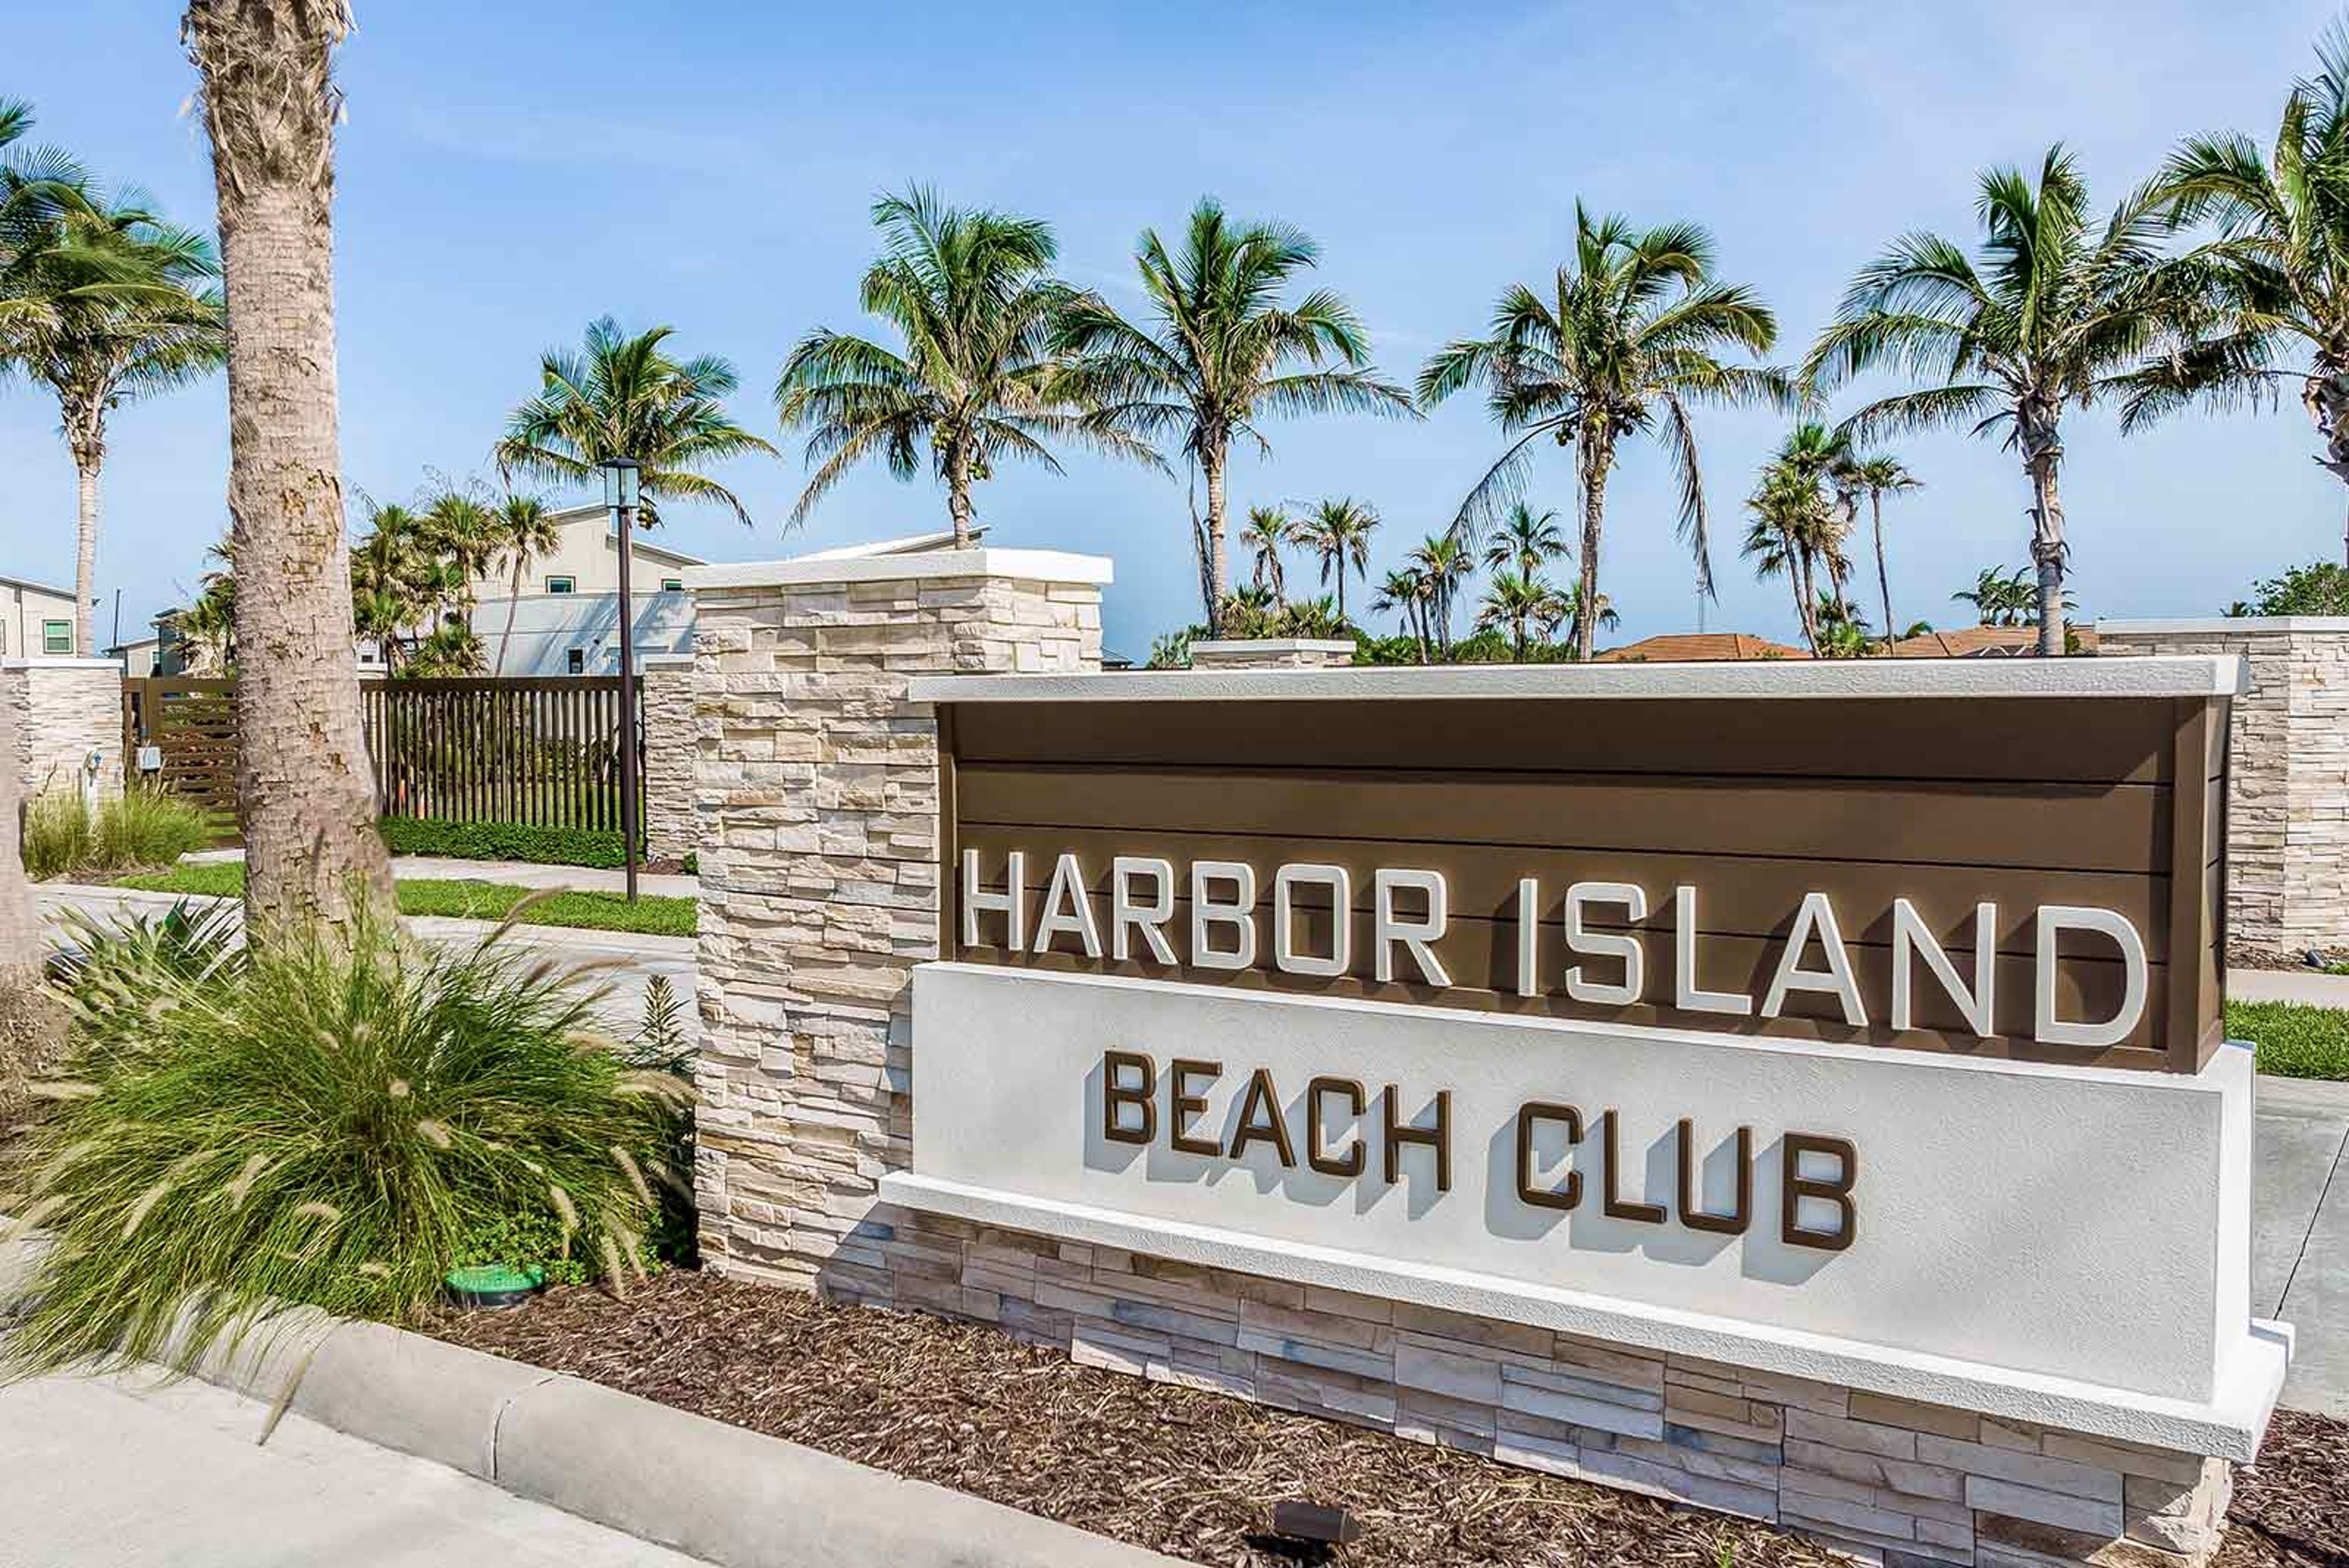 Big Bet at Harbor Island Beach Club - 46